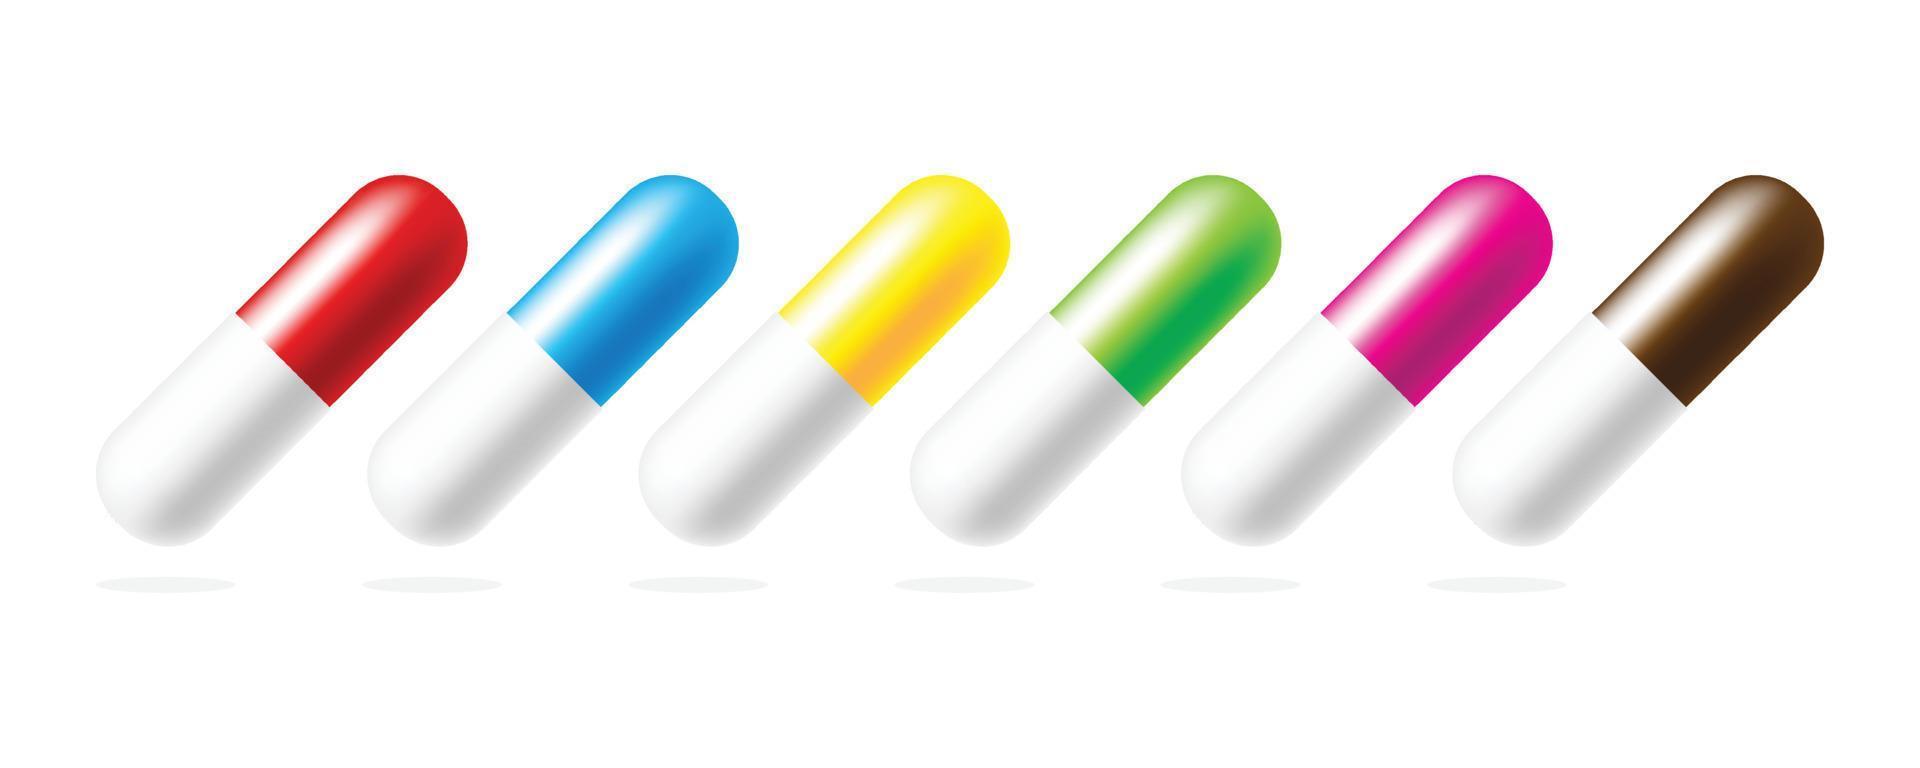 Realistic Medicine Pills or Capsules Design Template vector